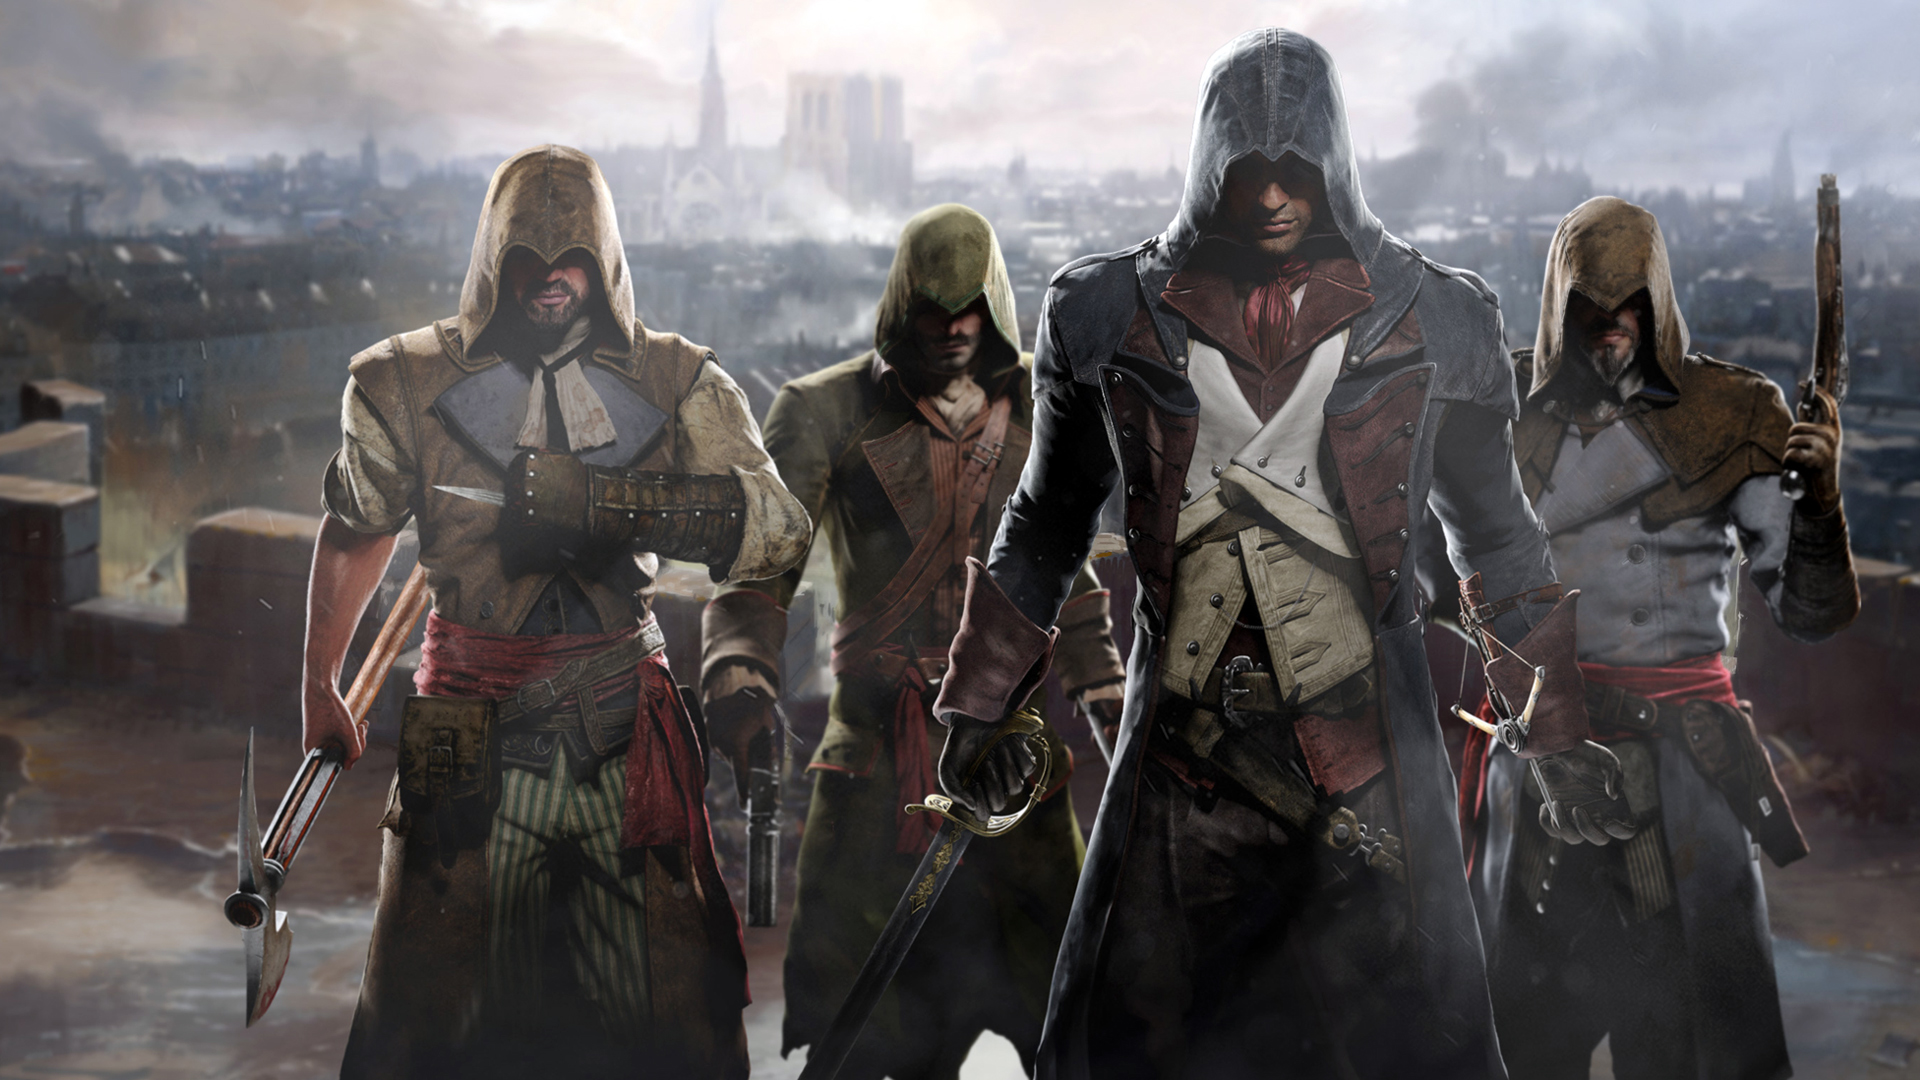 Assassin's Creed: Unity HD wallpapers, Desktop wallpaper - most viewed